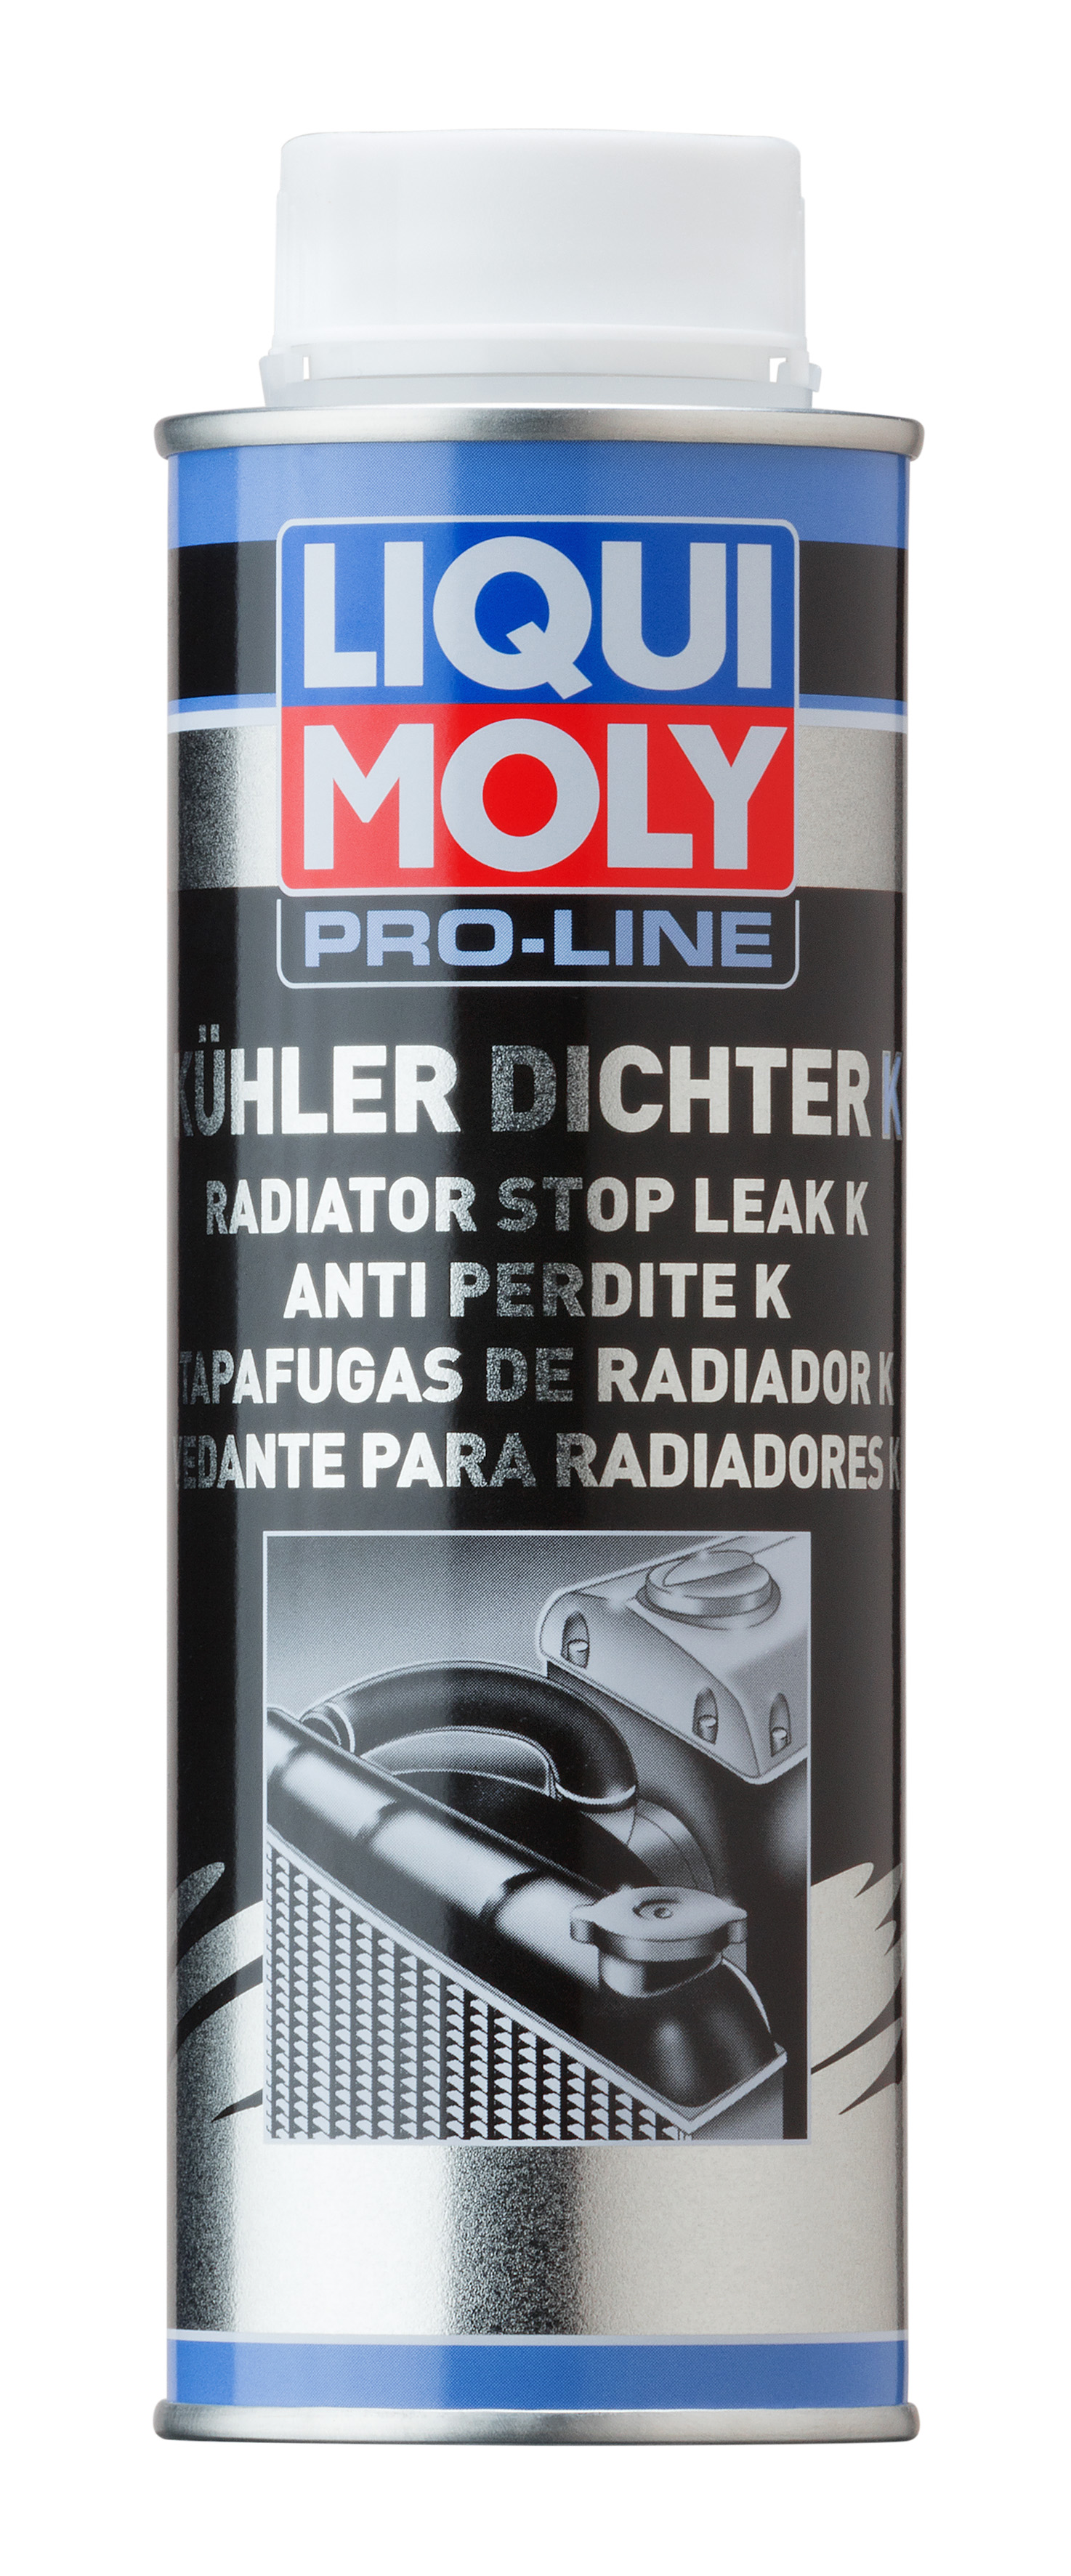 Liqui Moly 5178 Pro-Line Kühler Dichter K 250ml